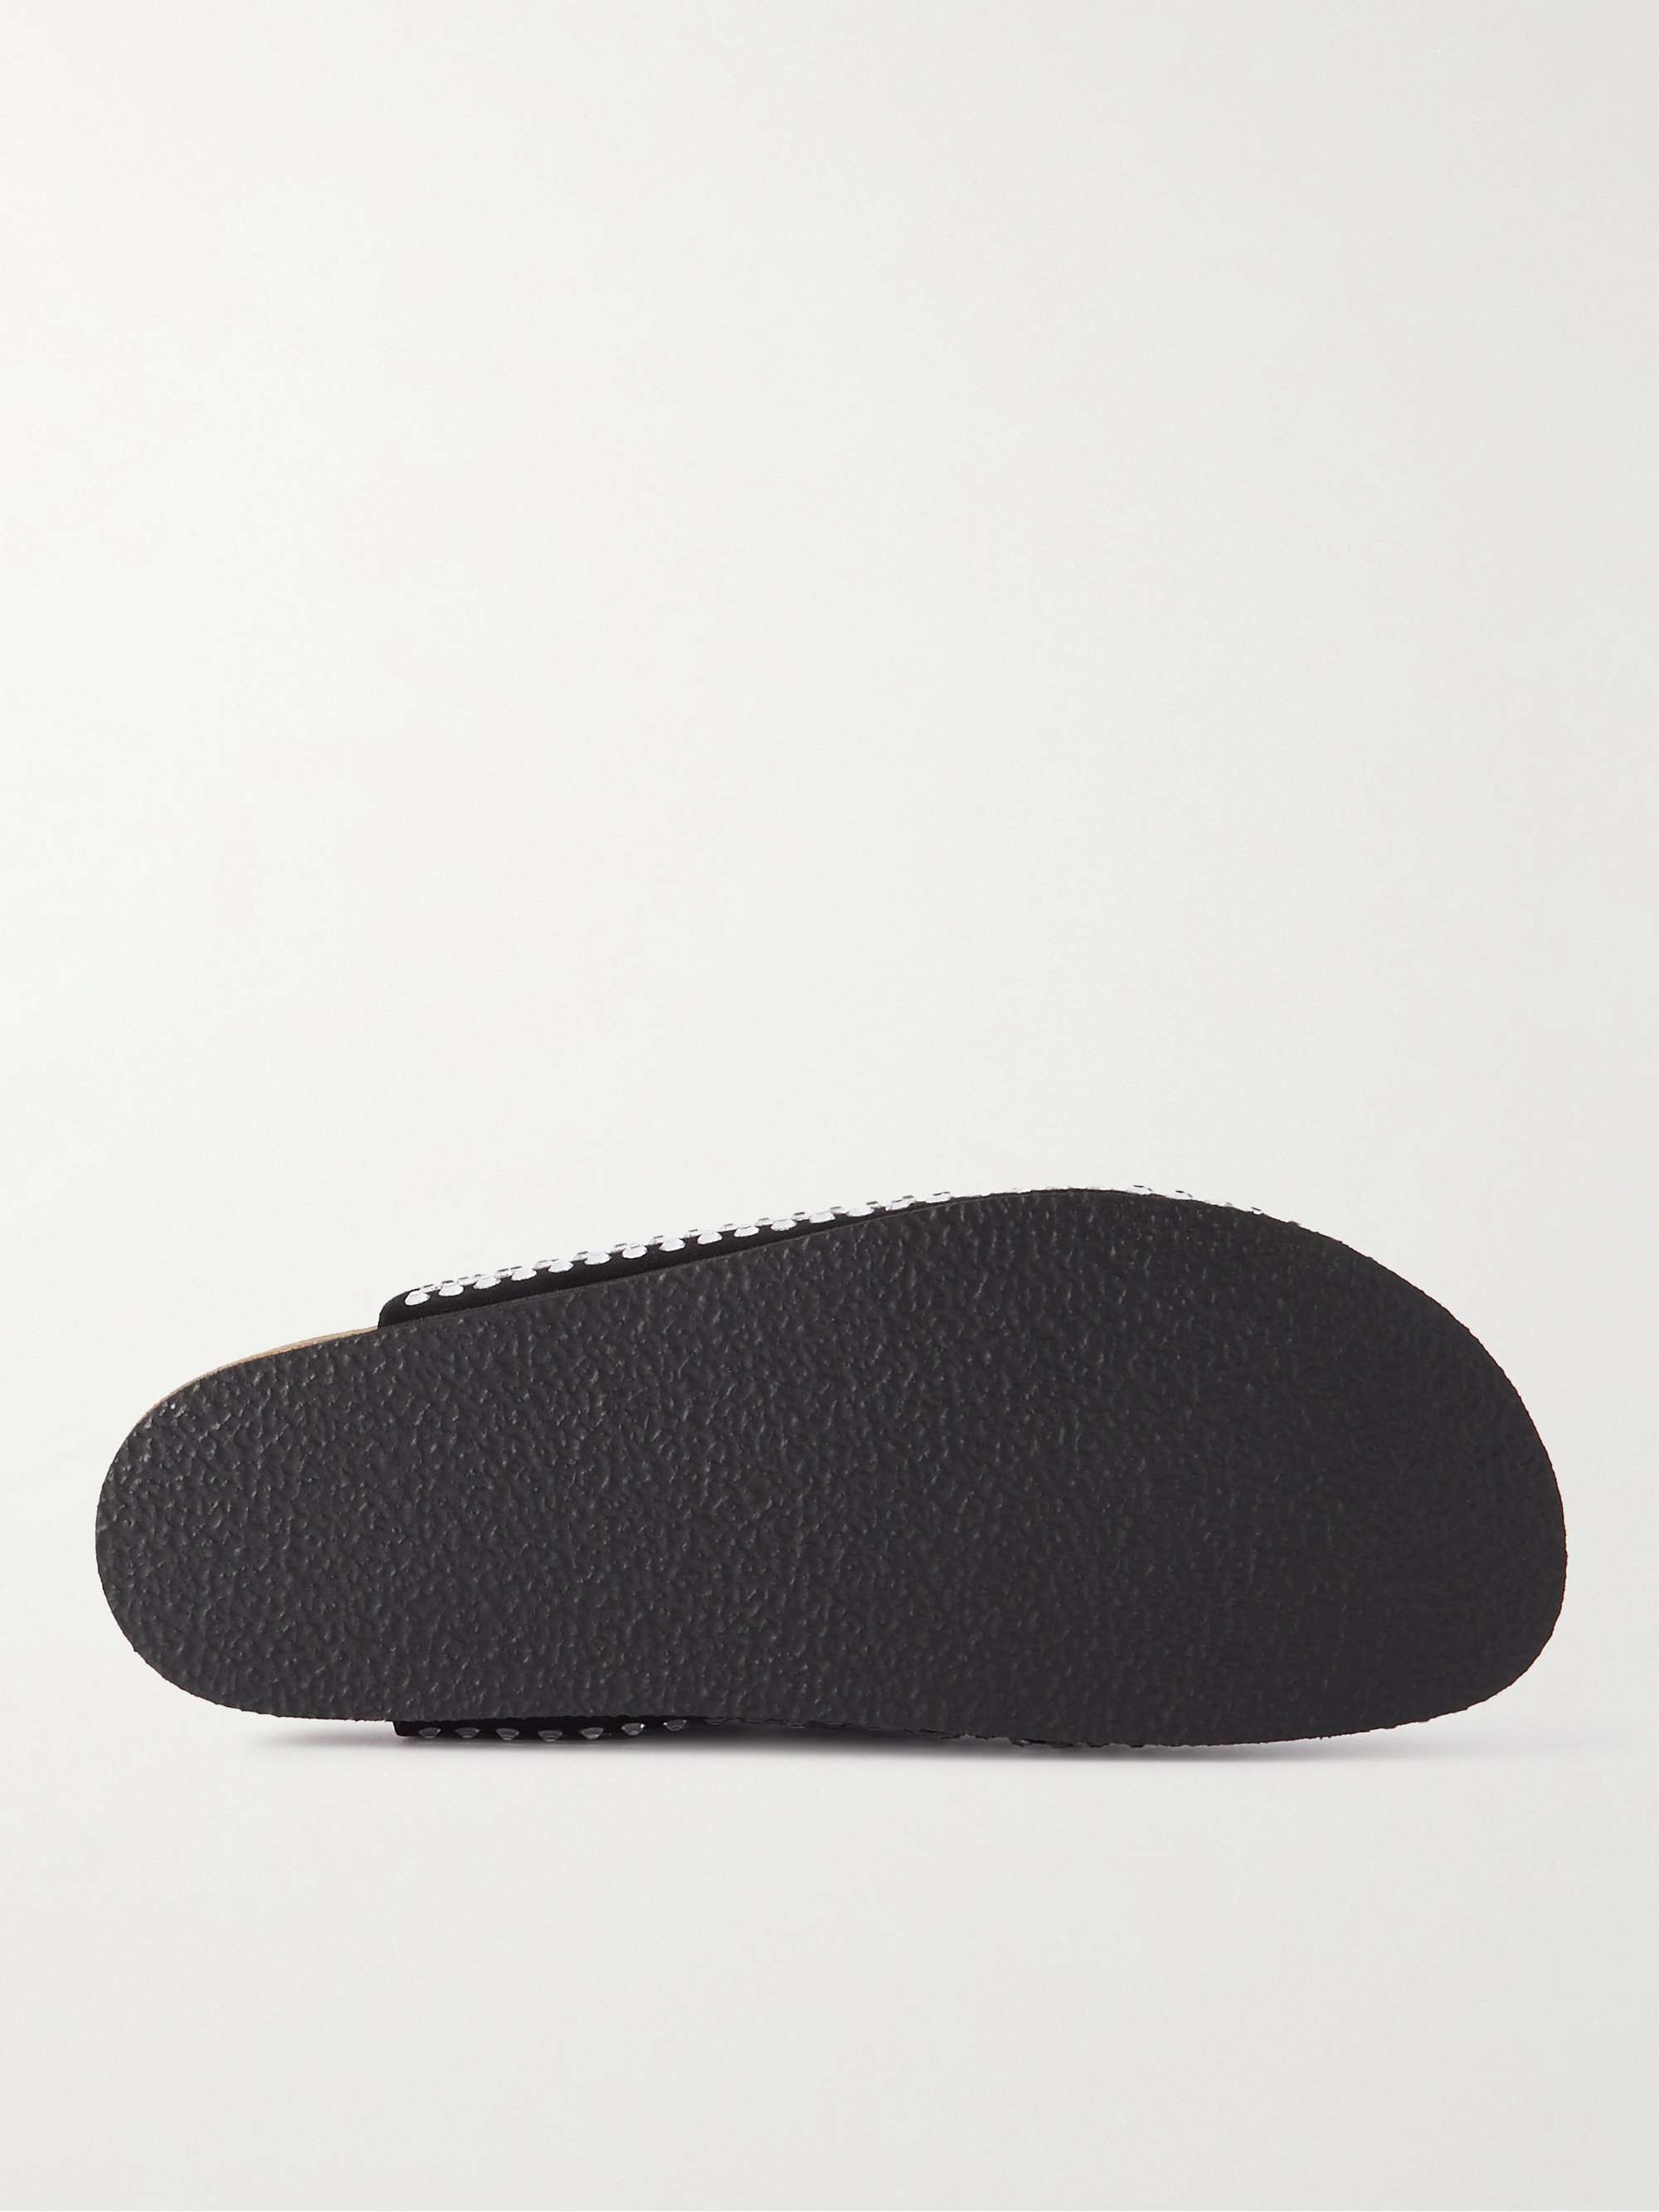 JW ANDERSON Leather-Trimmed Crystal-Embellished Suede Slippers